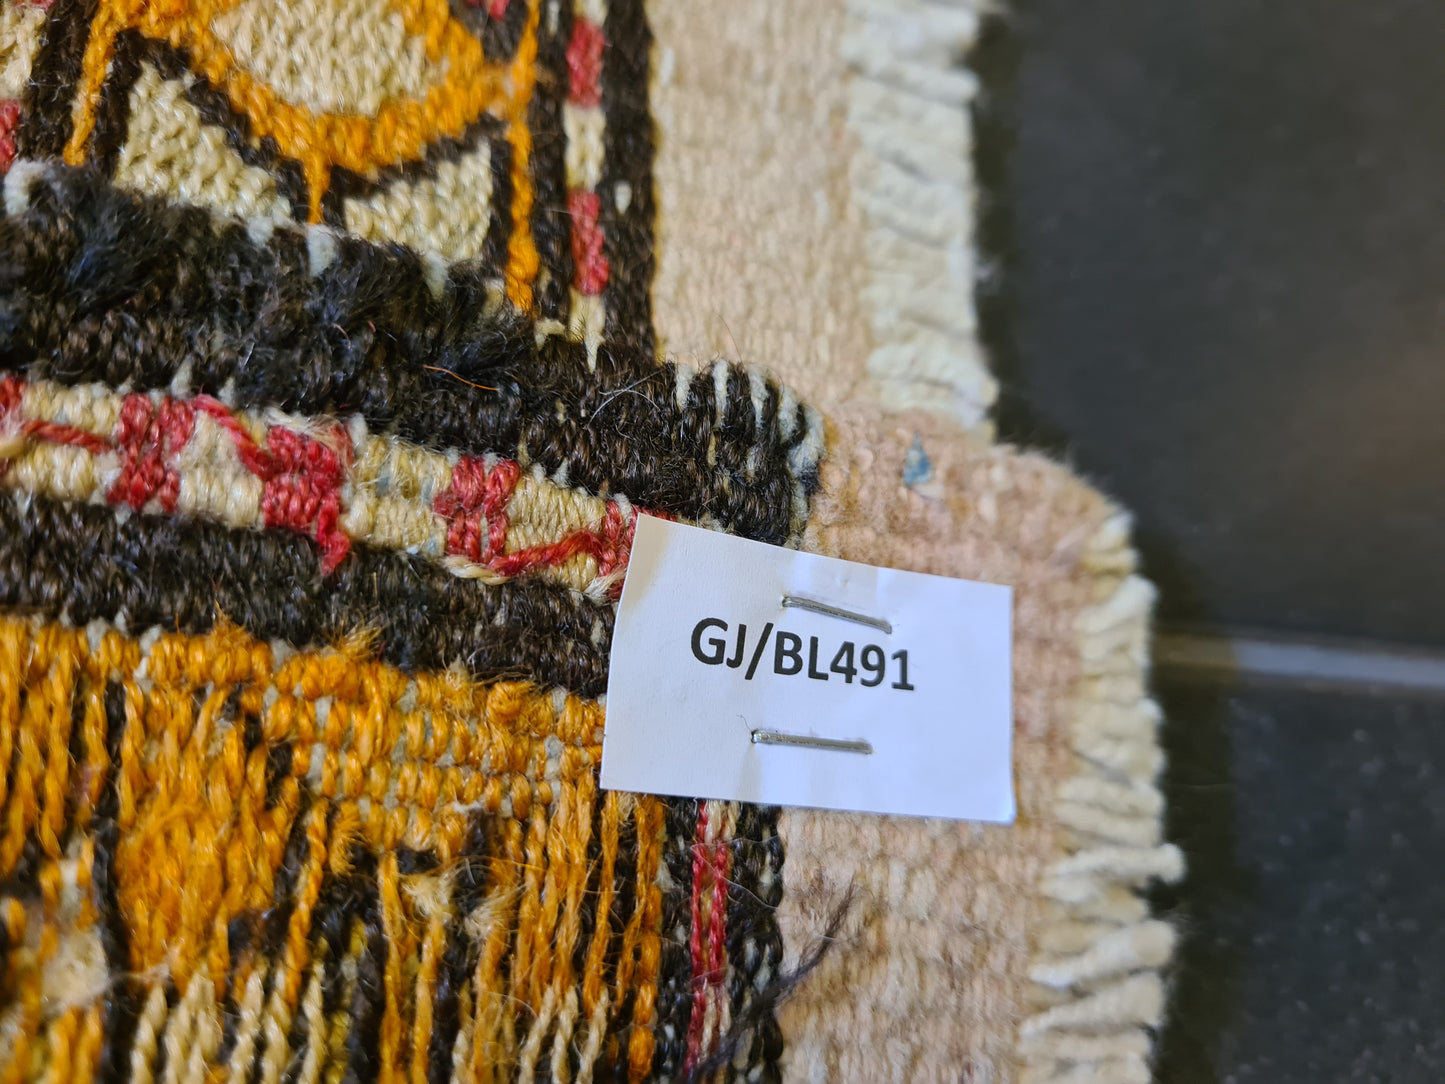 Antiker Feiner Sumak Kasak Orientteppich Wertvolles Sammlerstück 104x55cm